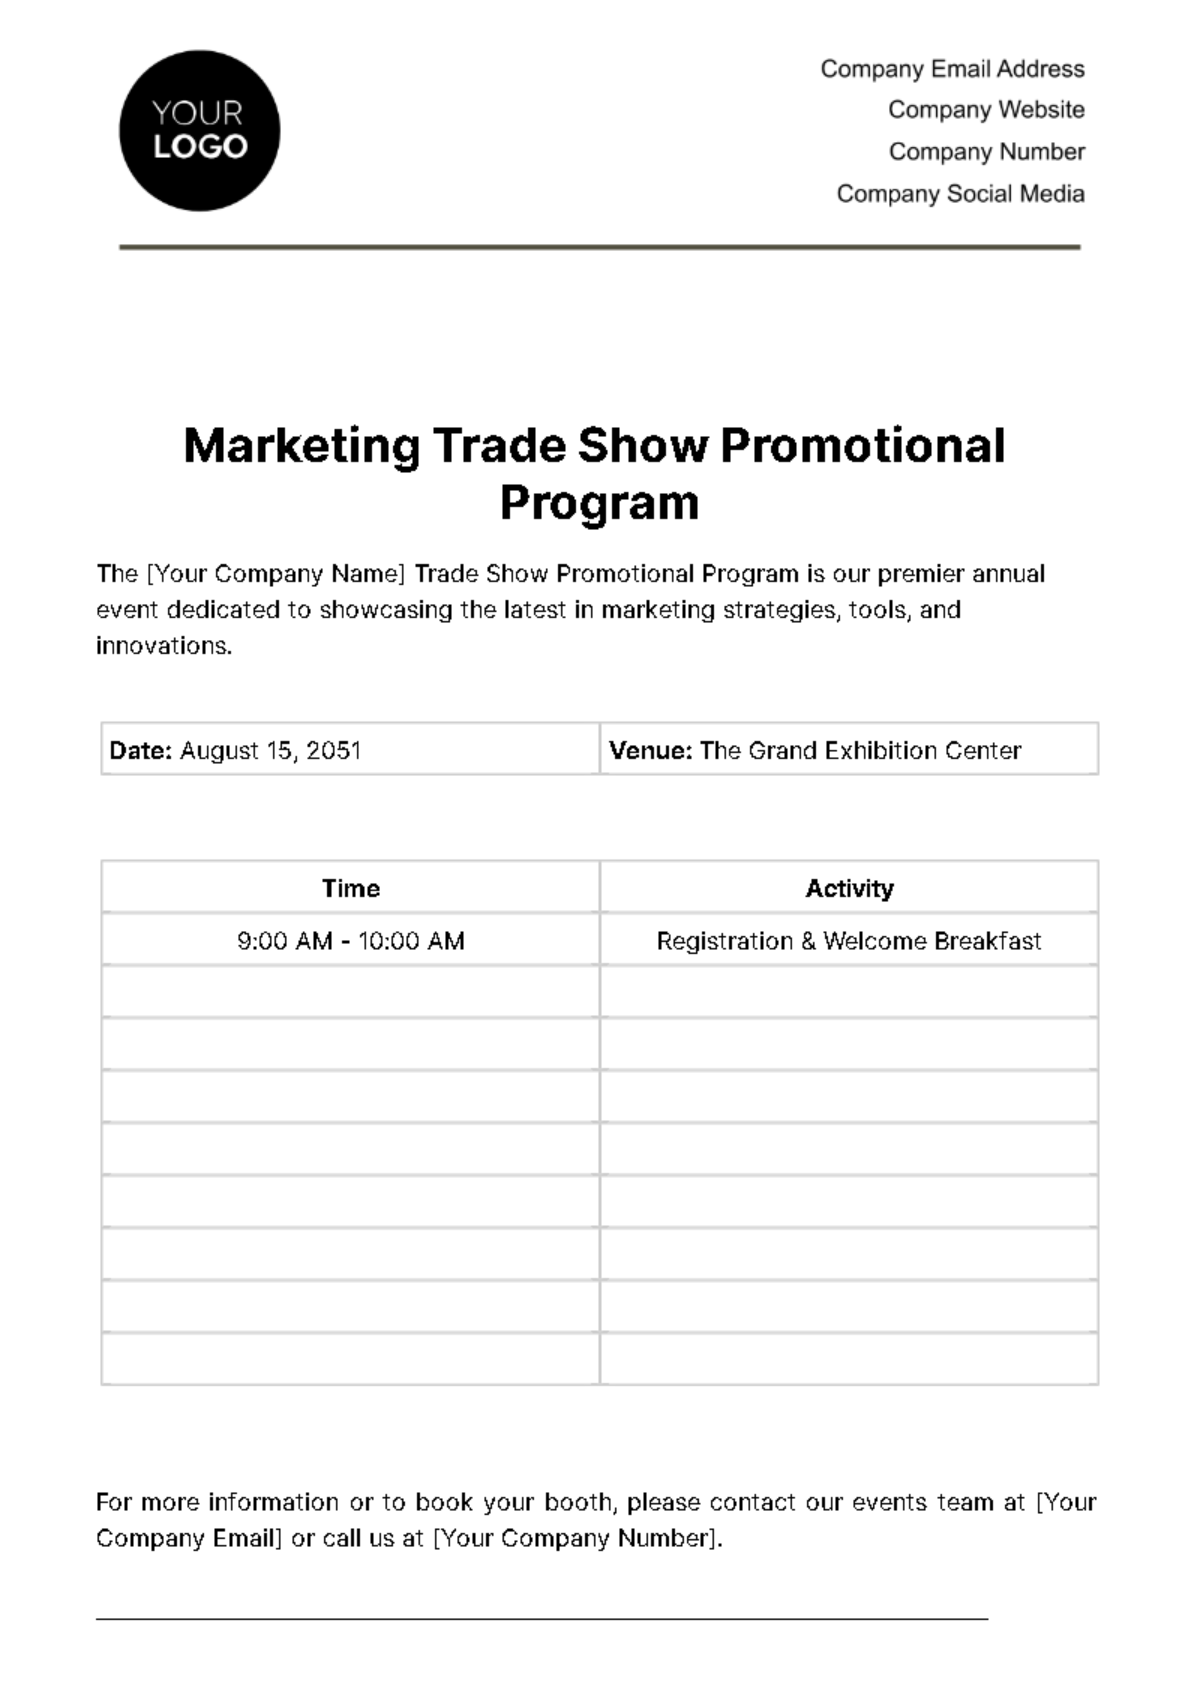 Marketing Trade Show Promotional Program Template